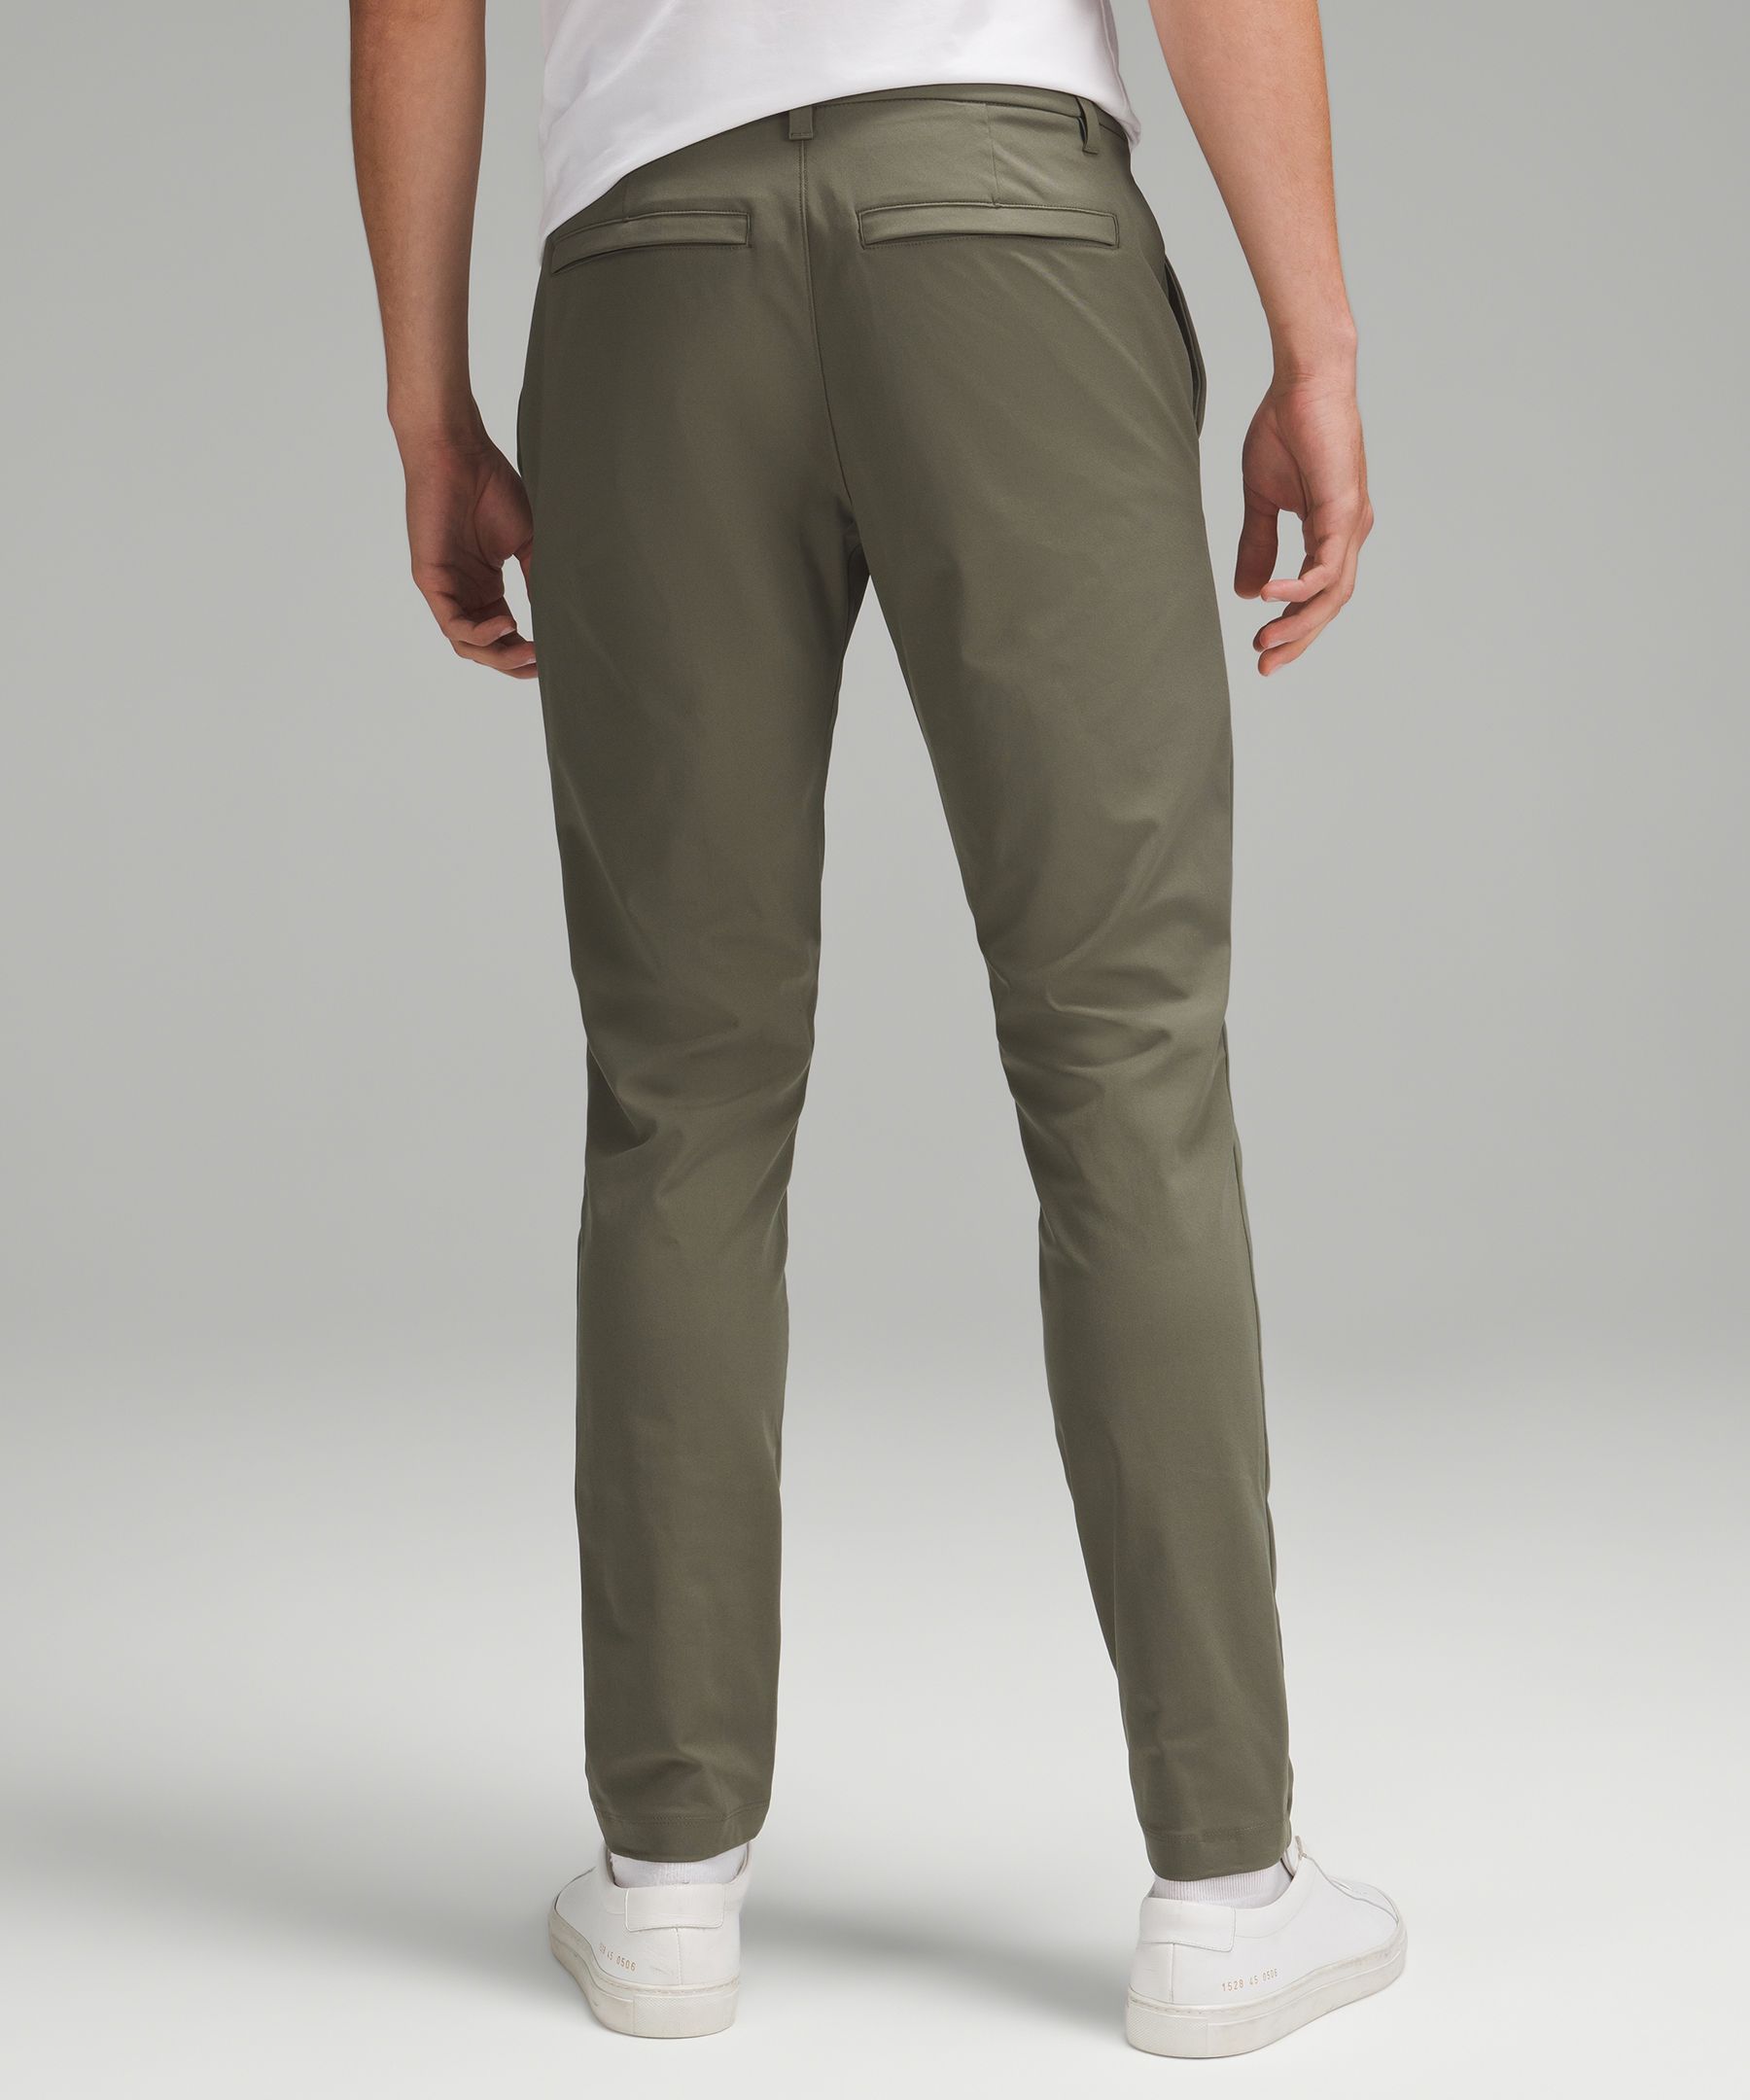 Lululemon Commission Slim-Fit Pants 34 Warpstreme - ShopStyle